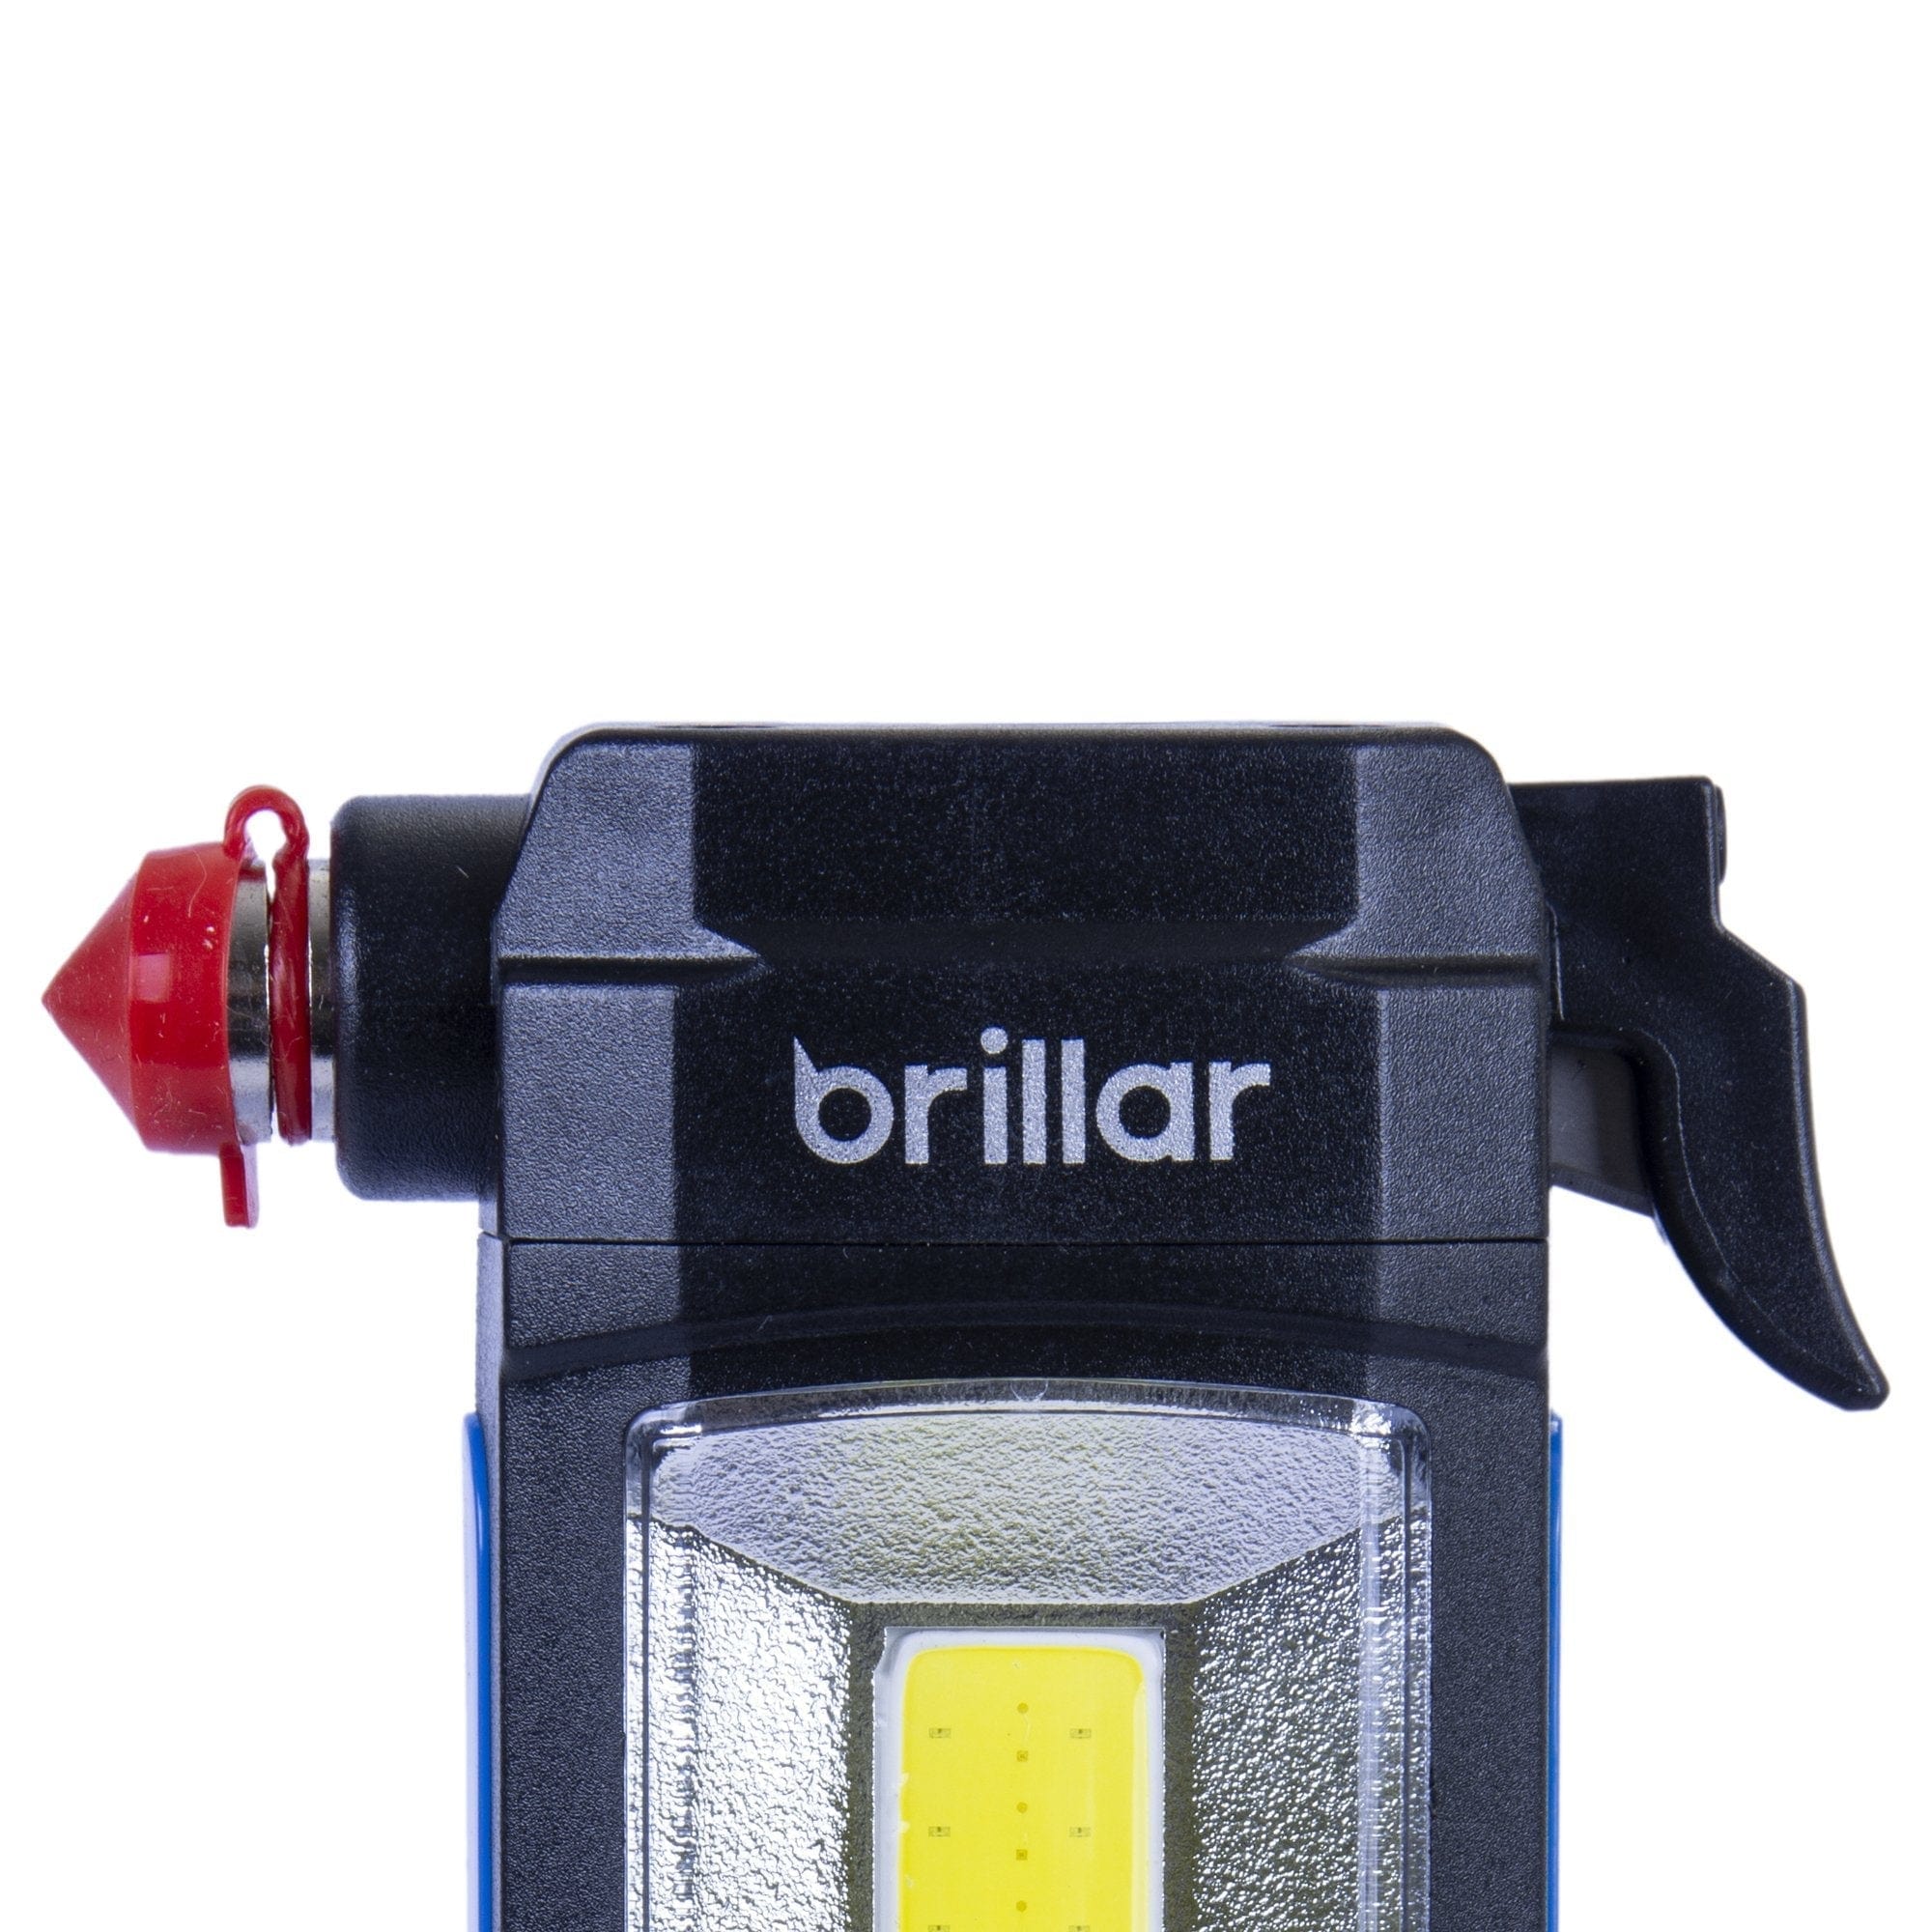 Brillar Electrical Emergency Torch, Seatbelt Cutter, Window Breaker - Black BR0042-Black